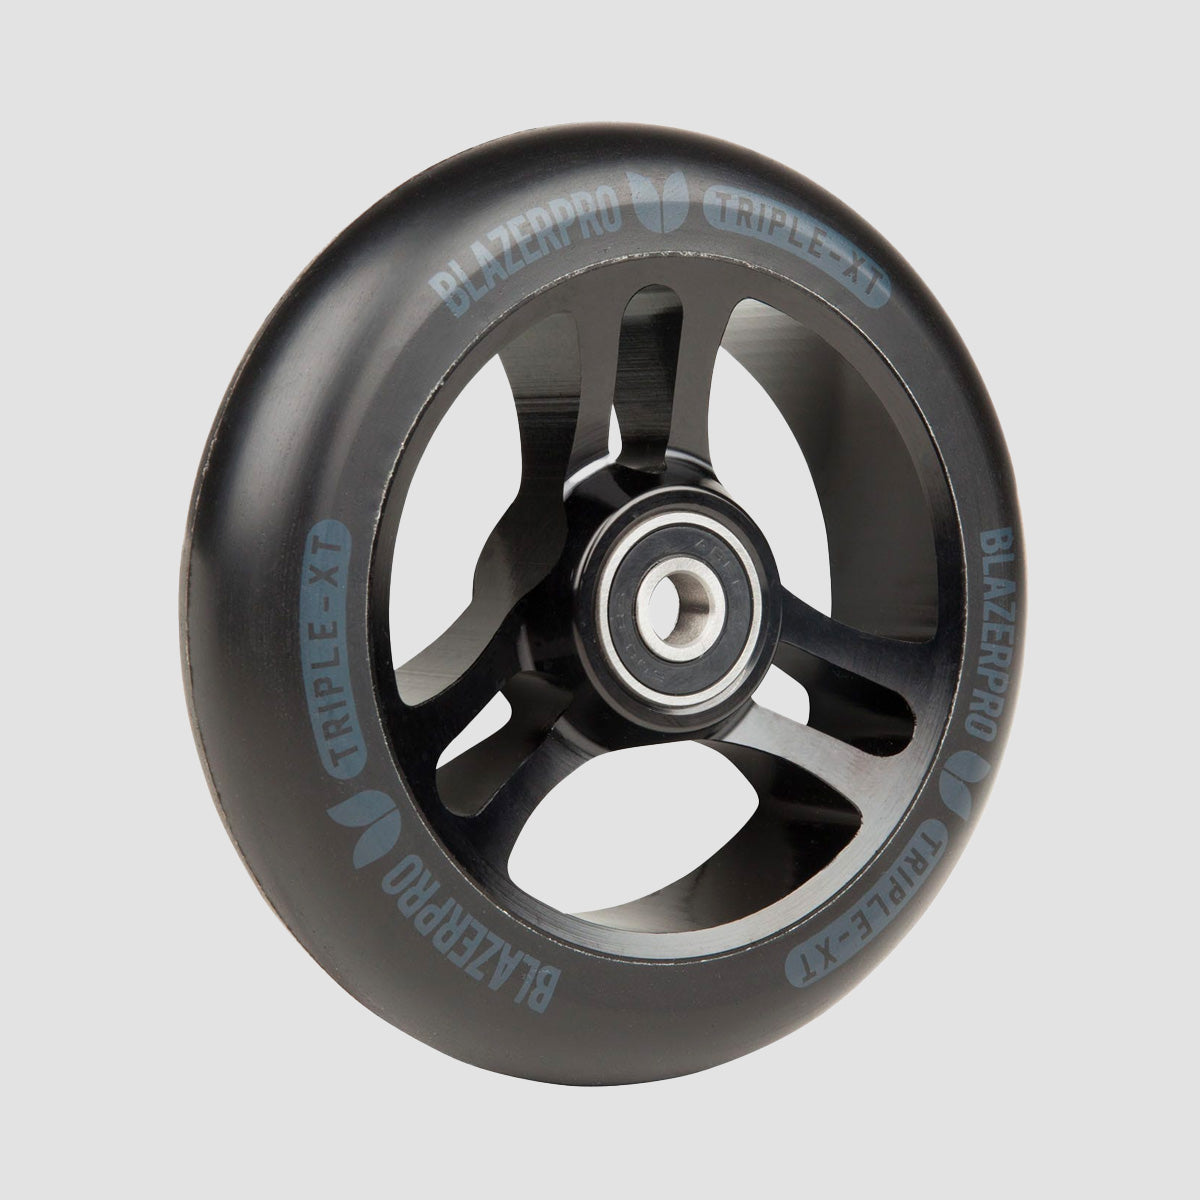 Blazer Pro Triple XT Scooter Wheel x1 Black/Black 110mm